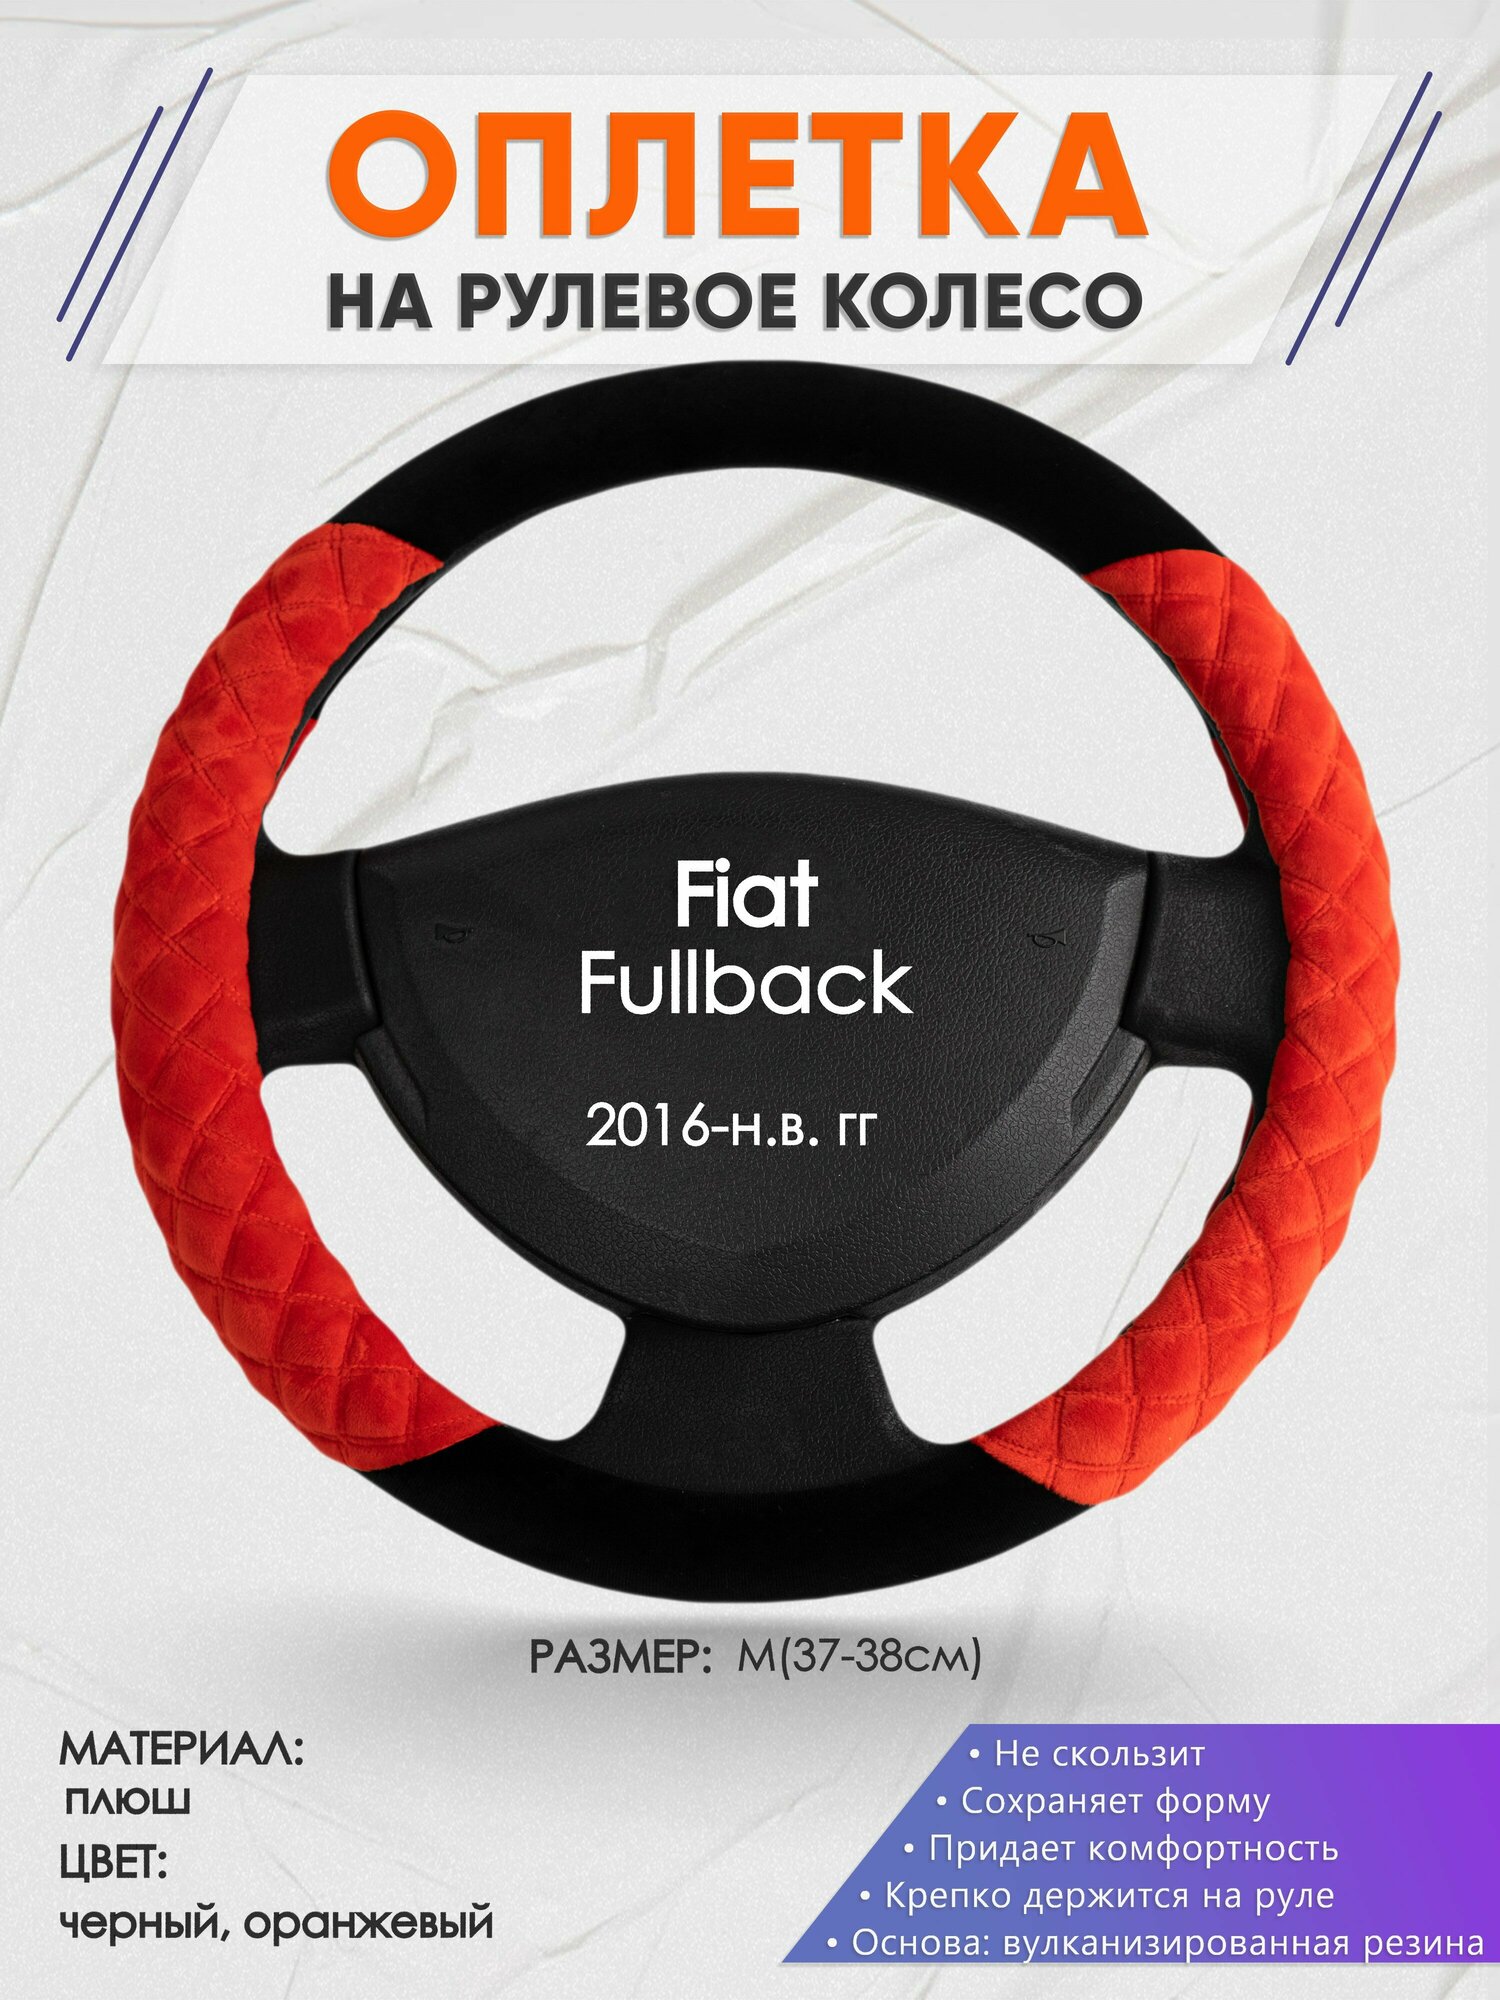 Оплетка на руль для Fiat Fullback (Фиат Фулбек) 2016-н. в, M(37-38см), Замша 37